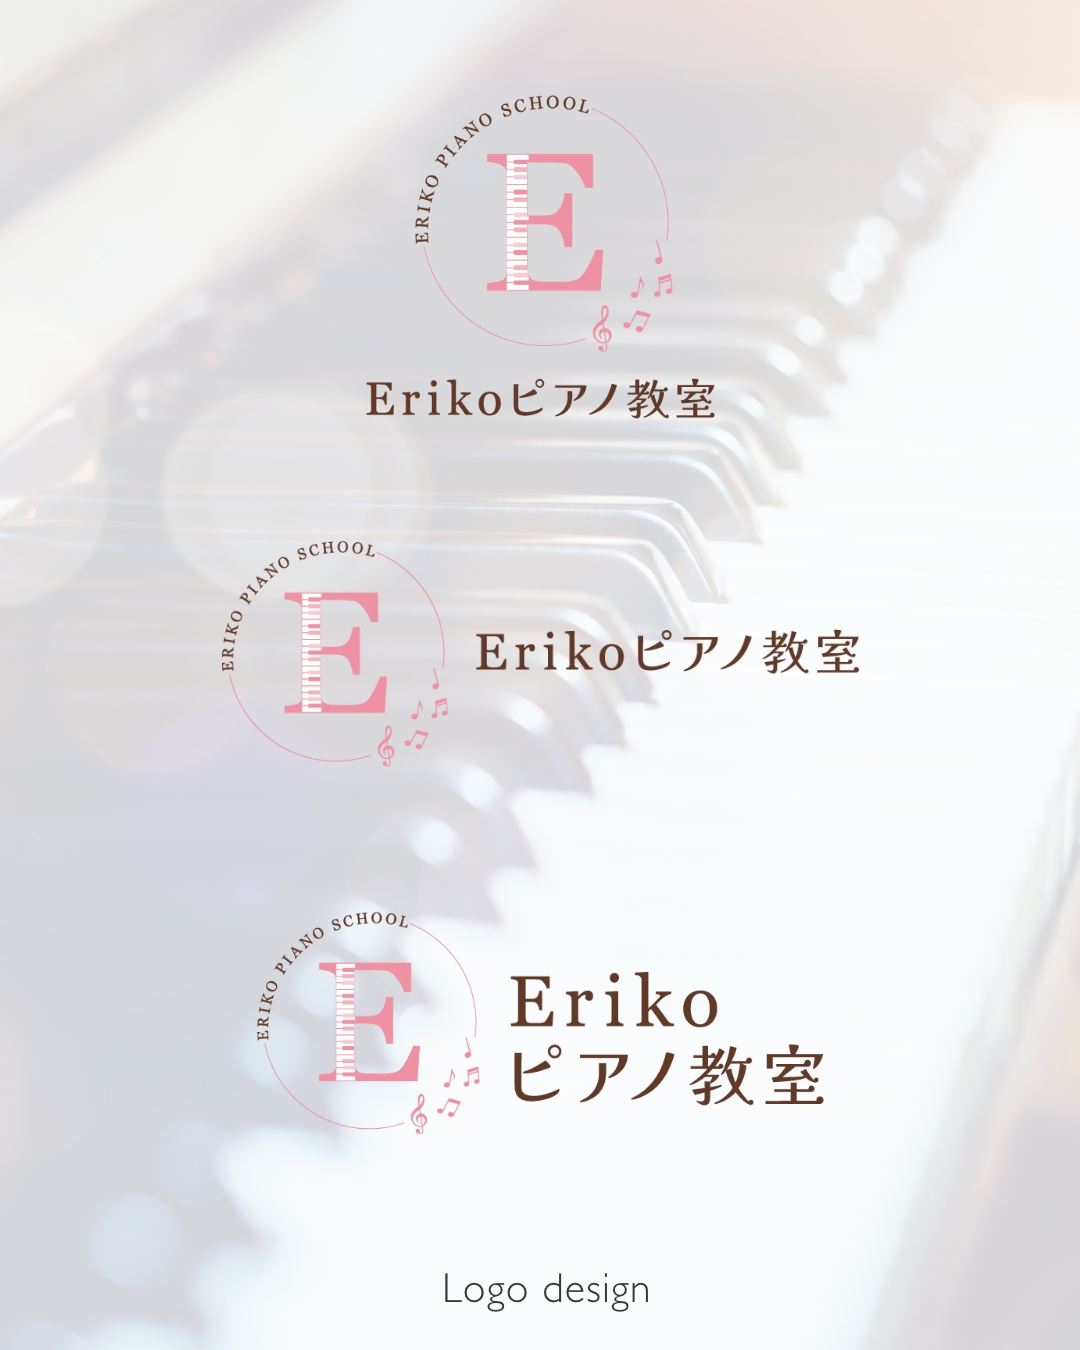 Erikoピアノ教室さまロゴ3パターン